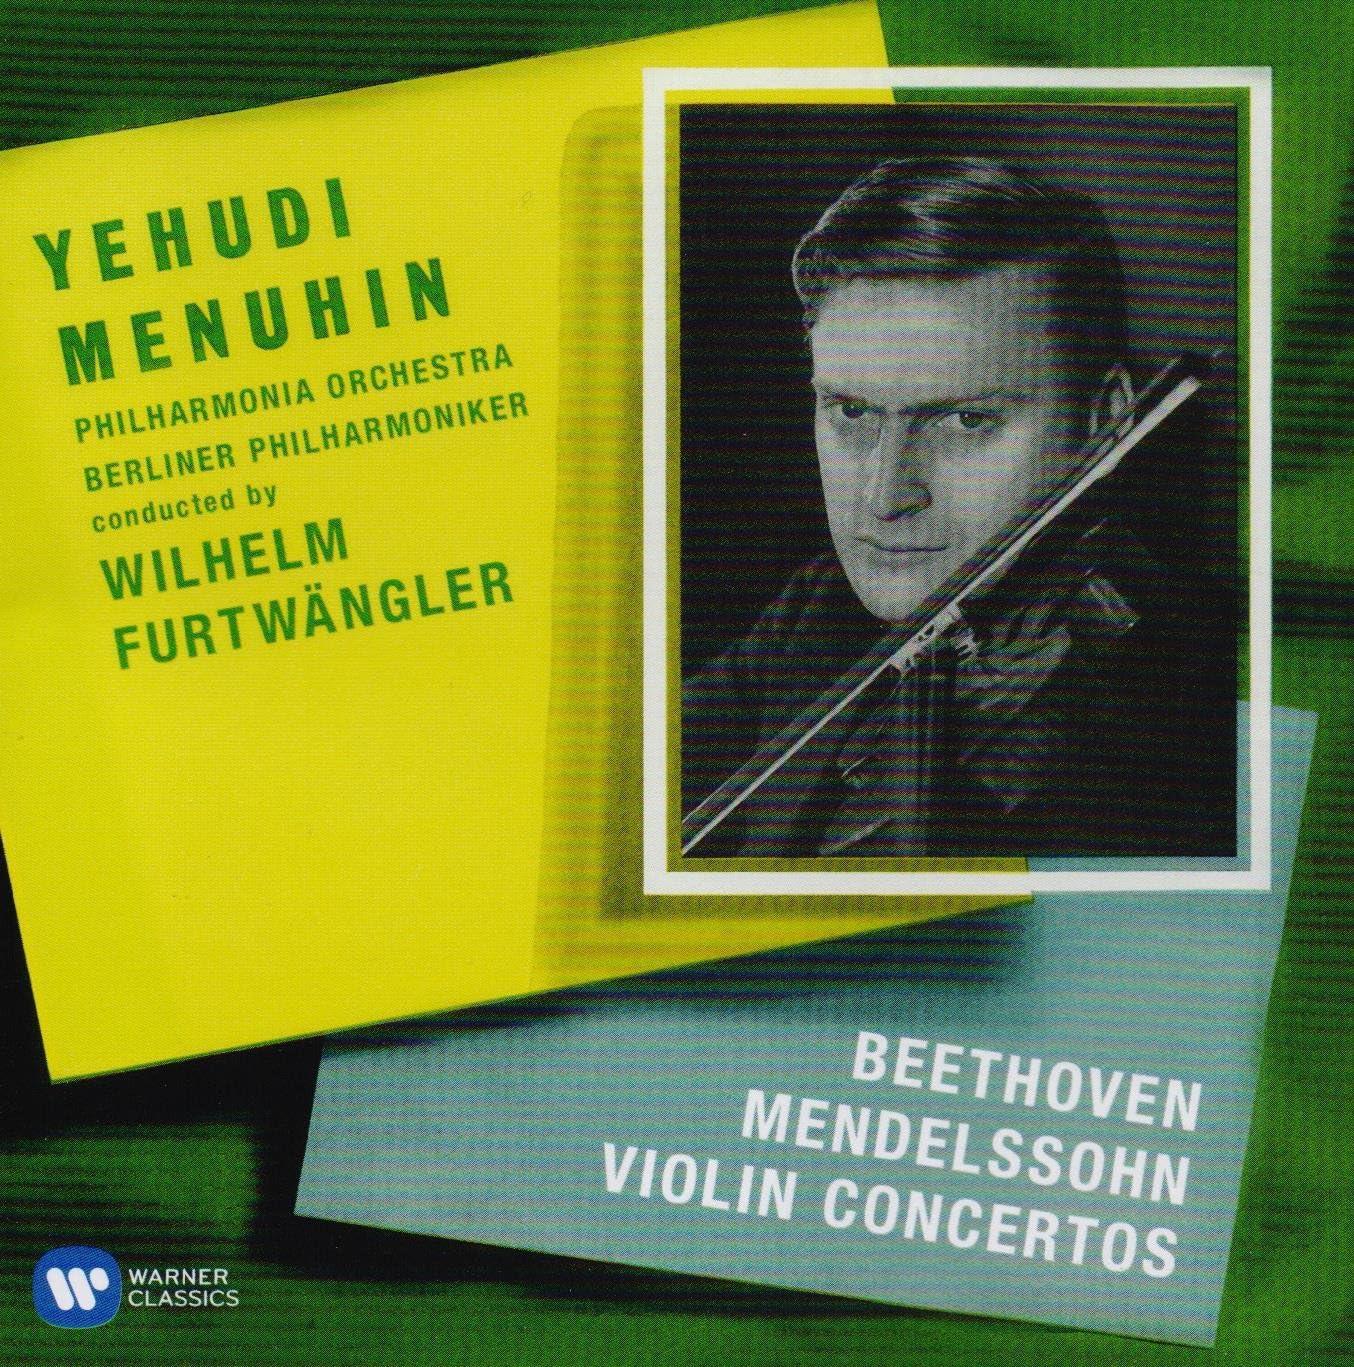 Beethoven & Mendelssohn: Violin Concertos | Yehudi Menuhin, Wilhelm Furtwangler, Philharmonia Orchestra, Berliner Philharmoniker